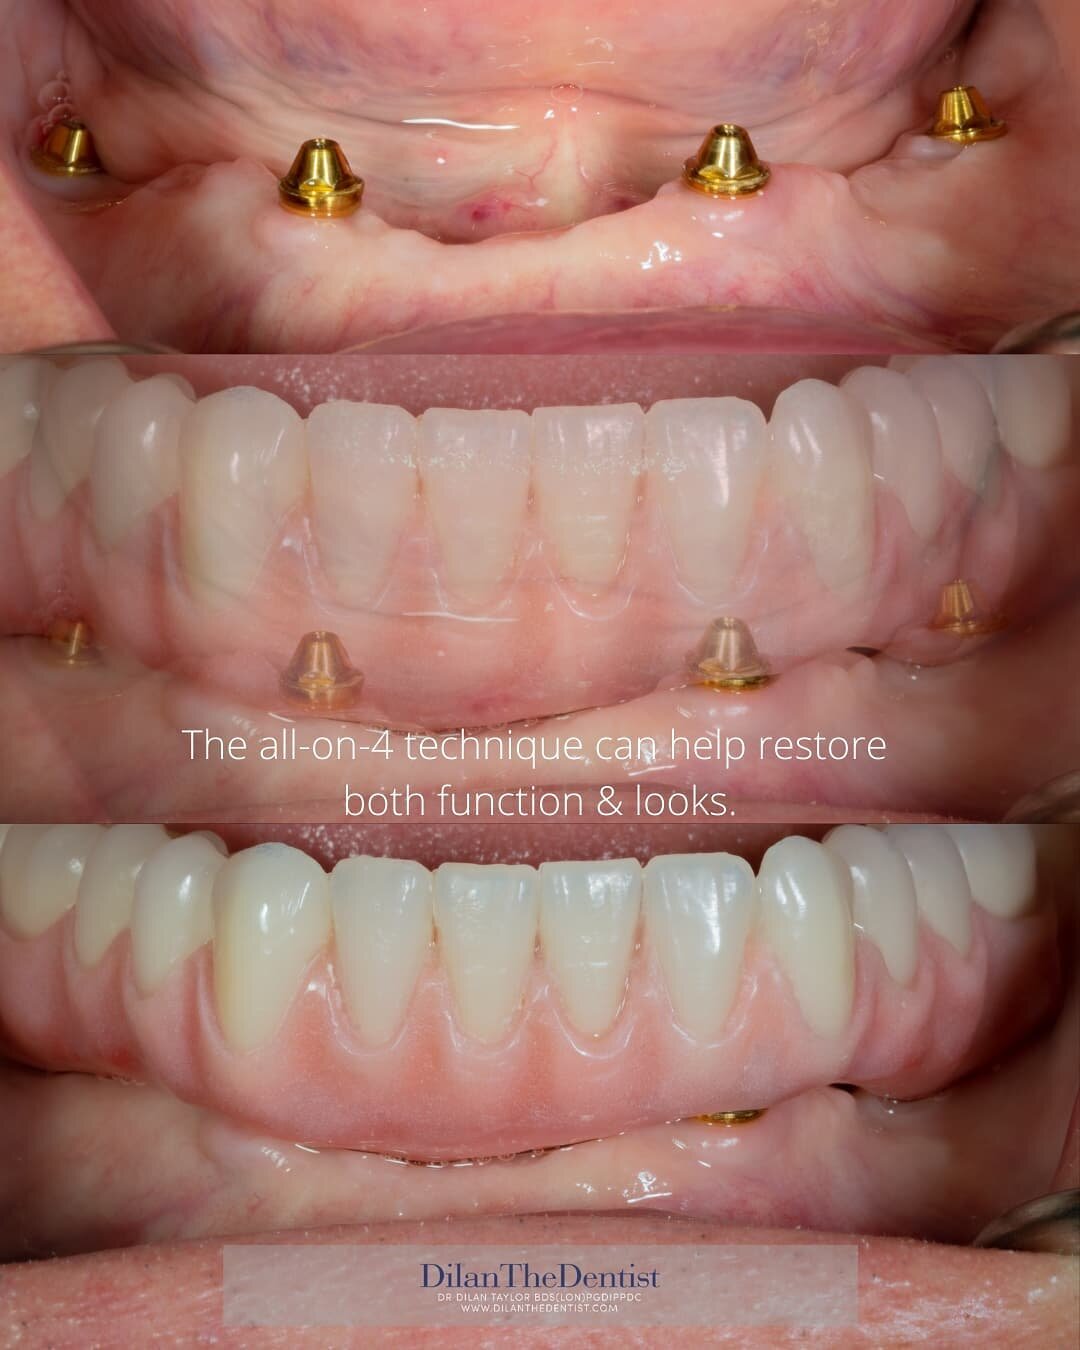 Blending function &amp; looks with an All-on-4 implant bridge

For more cases visit: www.dilanthedentist.com 

@osstemuk @prestwood_dental_health_centre
@oakview_dental

.

.

#dentalphotography #allon4 #allonfour #dentalimplants #implantdentistry #d